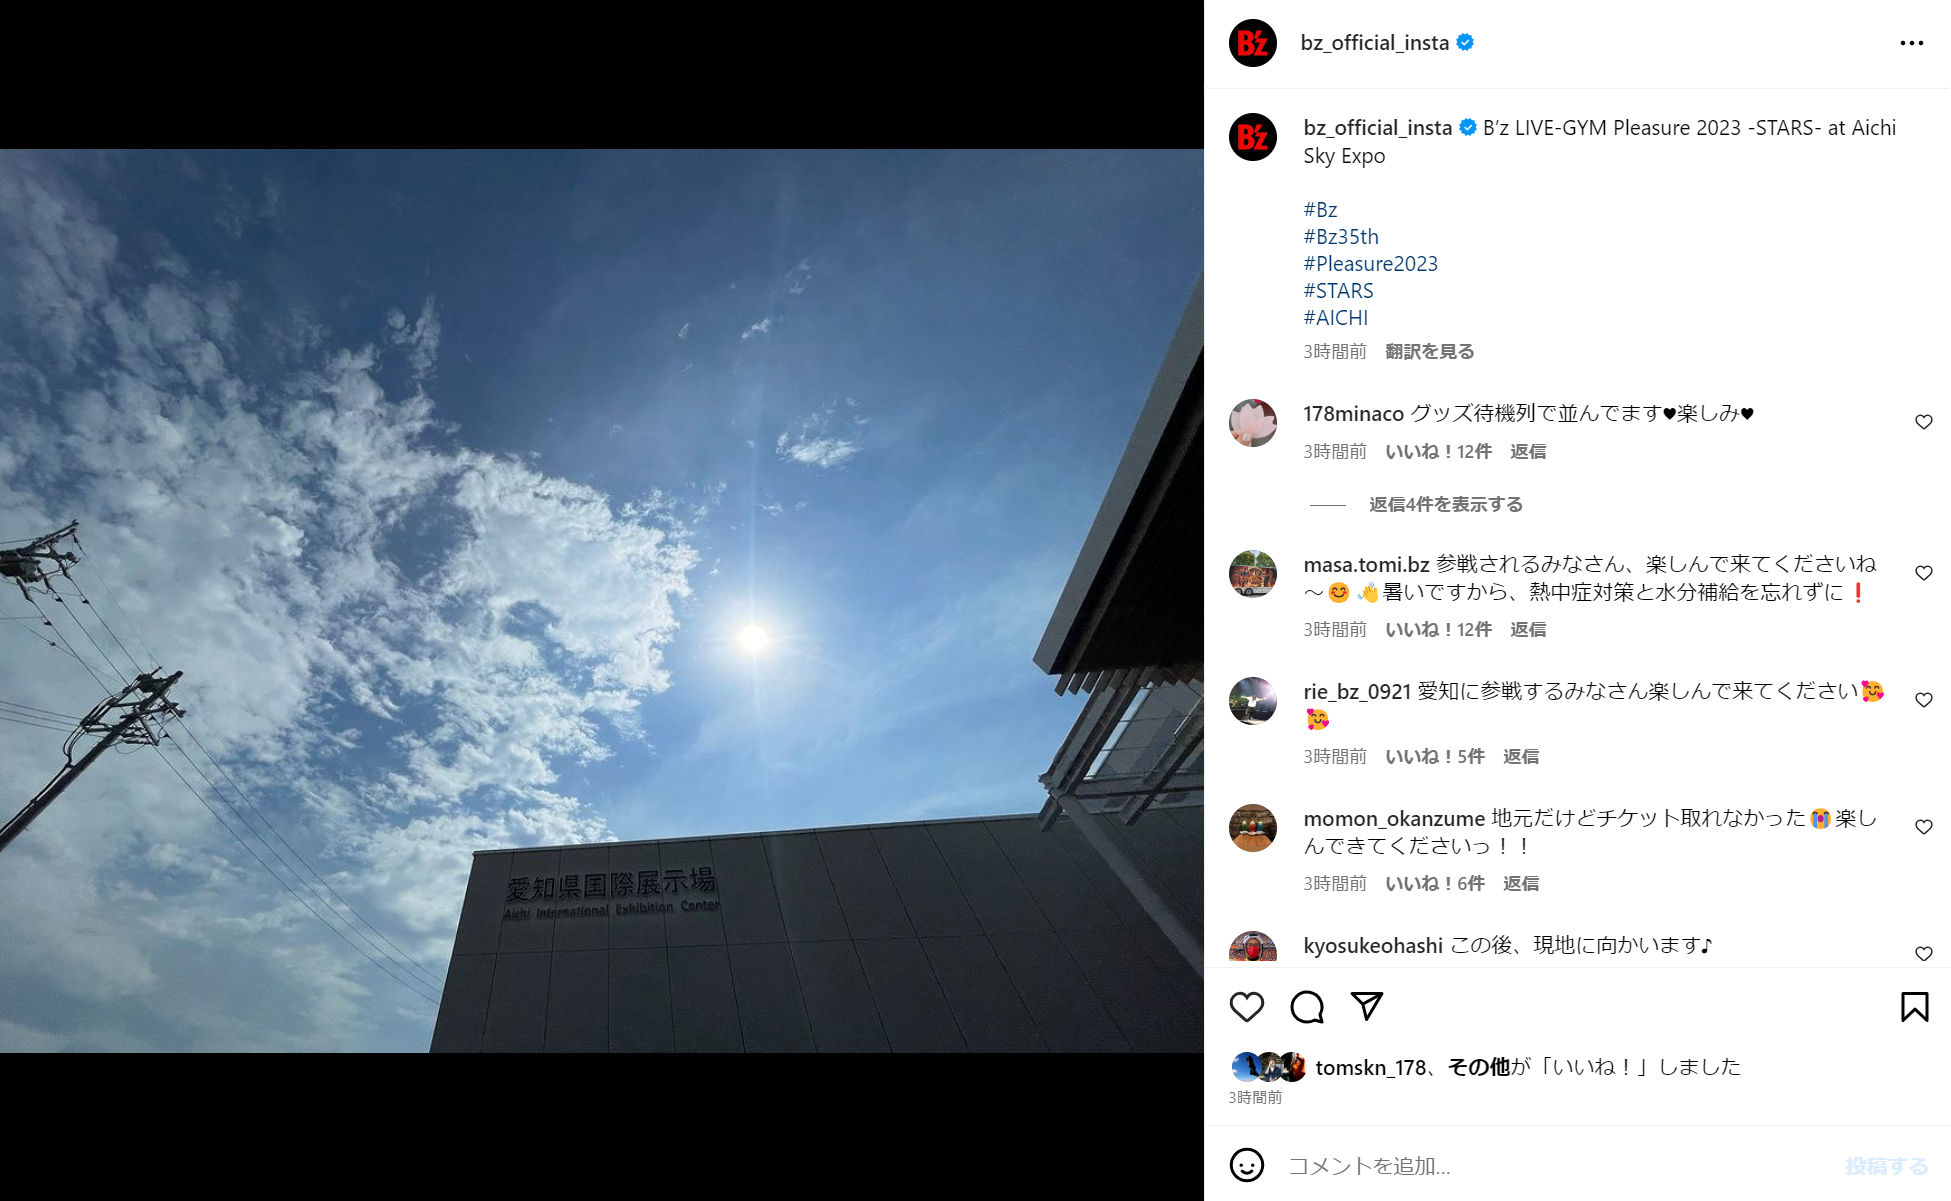 『B'z LIVE-GYM Pleasure 2023 -STARS-』愛知公演が行われるAichi Sky Expo(愛知県国際展示場) の写真